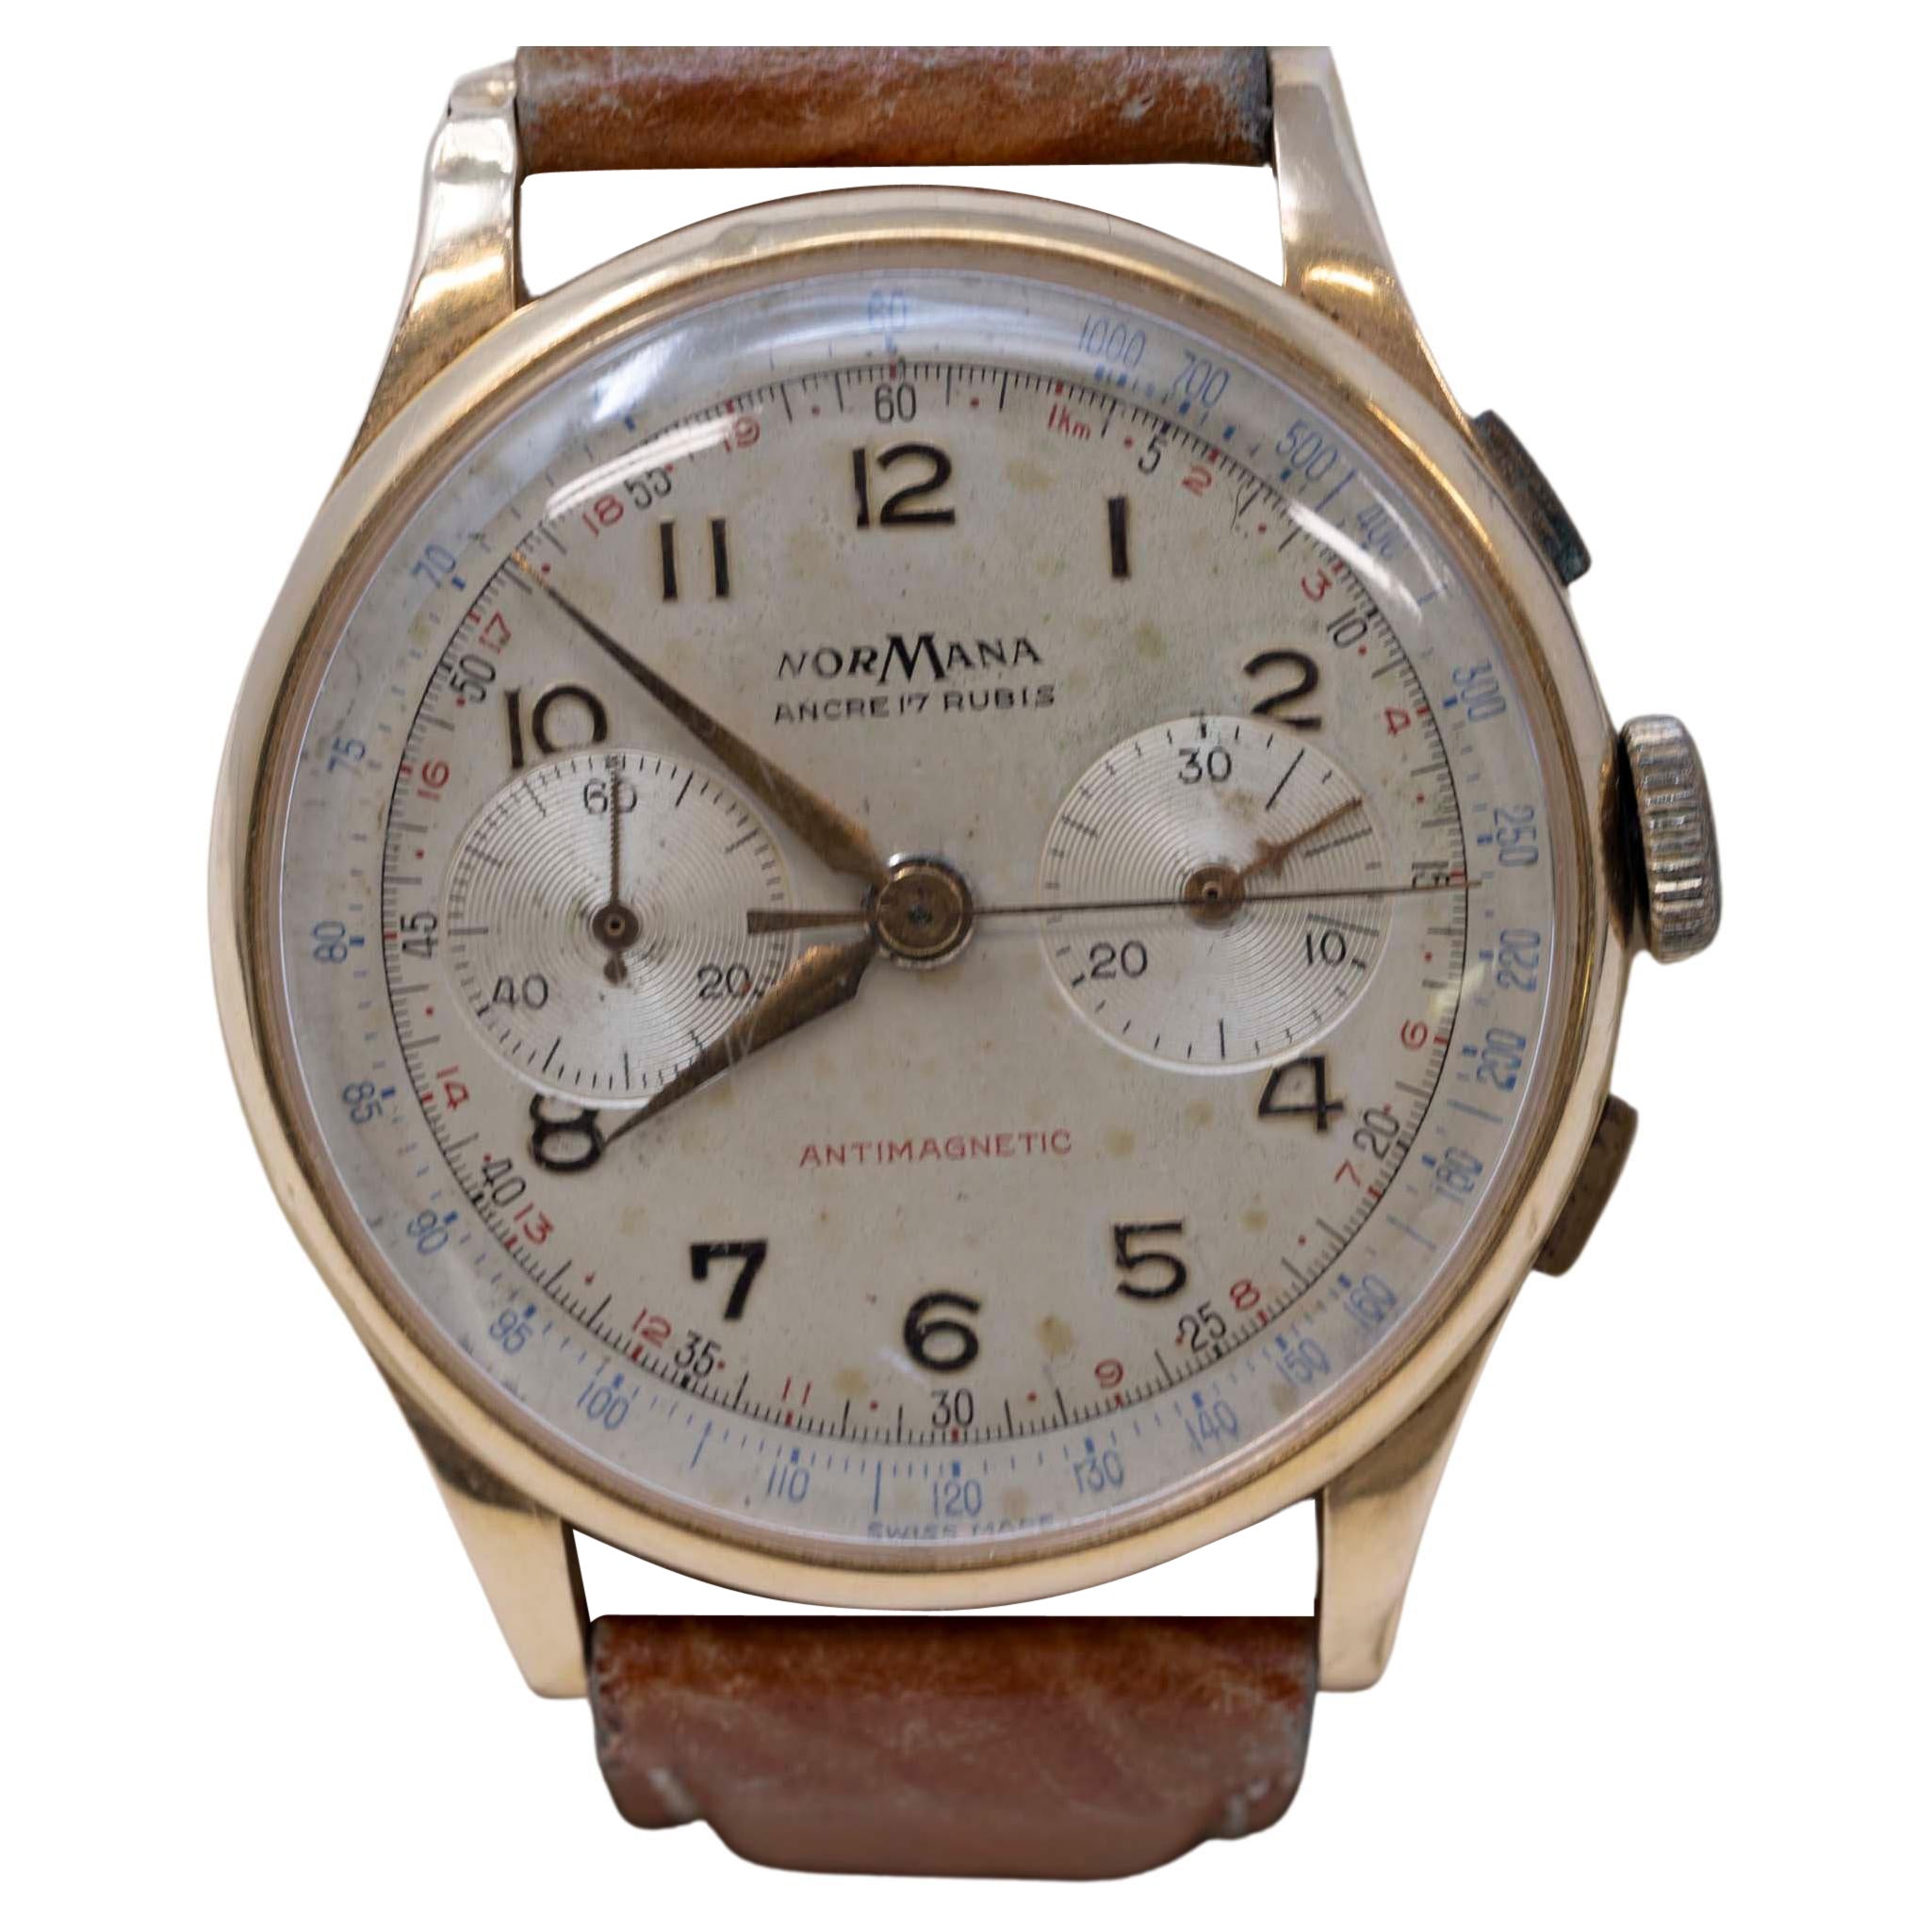 18k Gold NorMana Chronograph Men's Watch